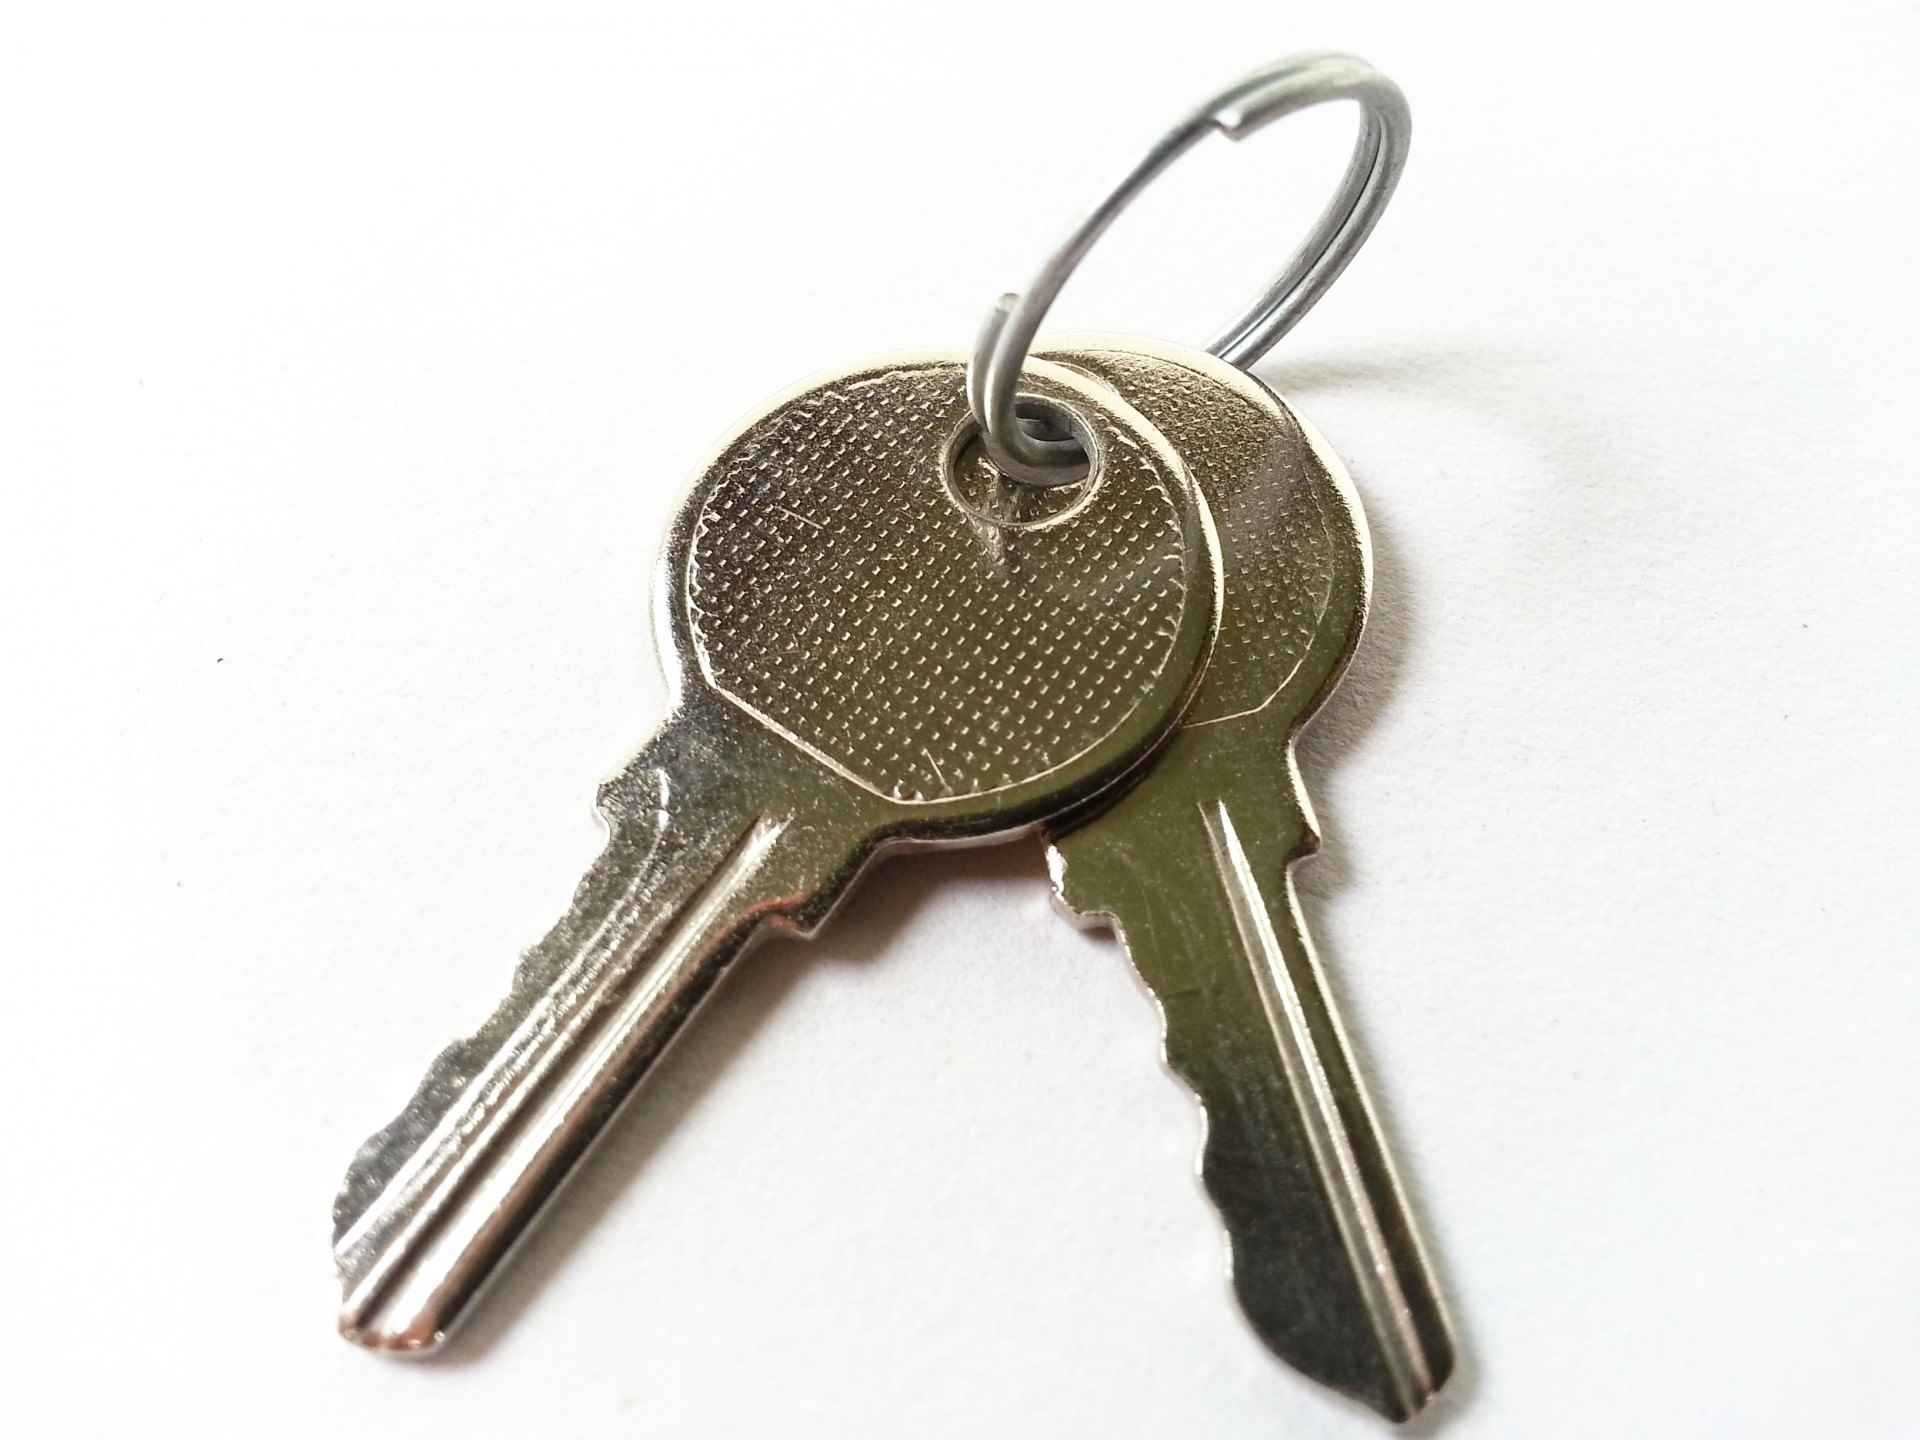 Keys picture. Ключ ul-4 замок дверной. Ключи от квартиры связка. Современный ключ. Изображение ключа.